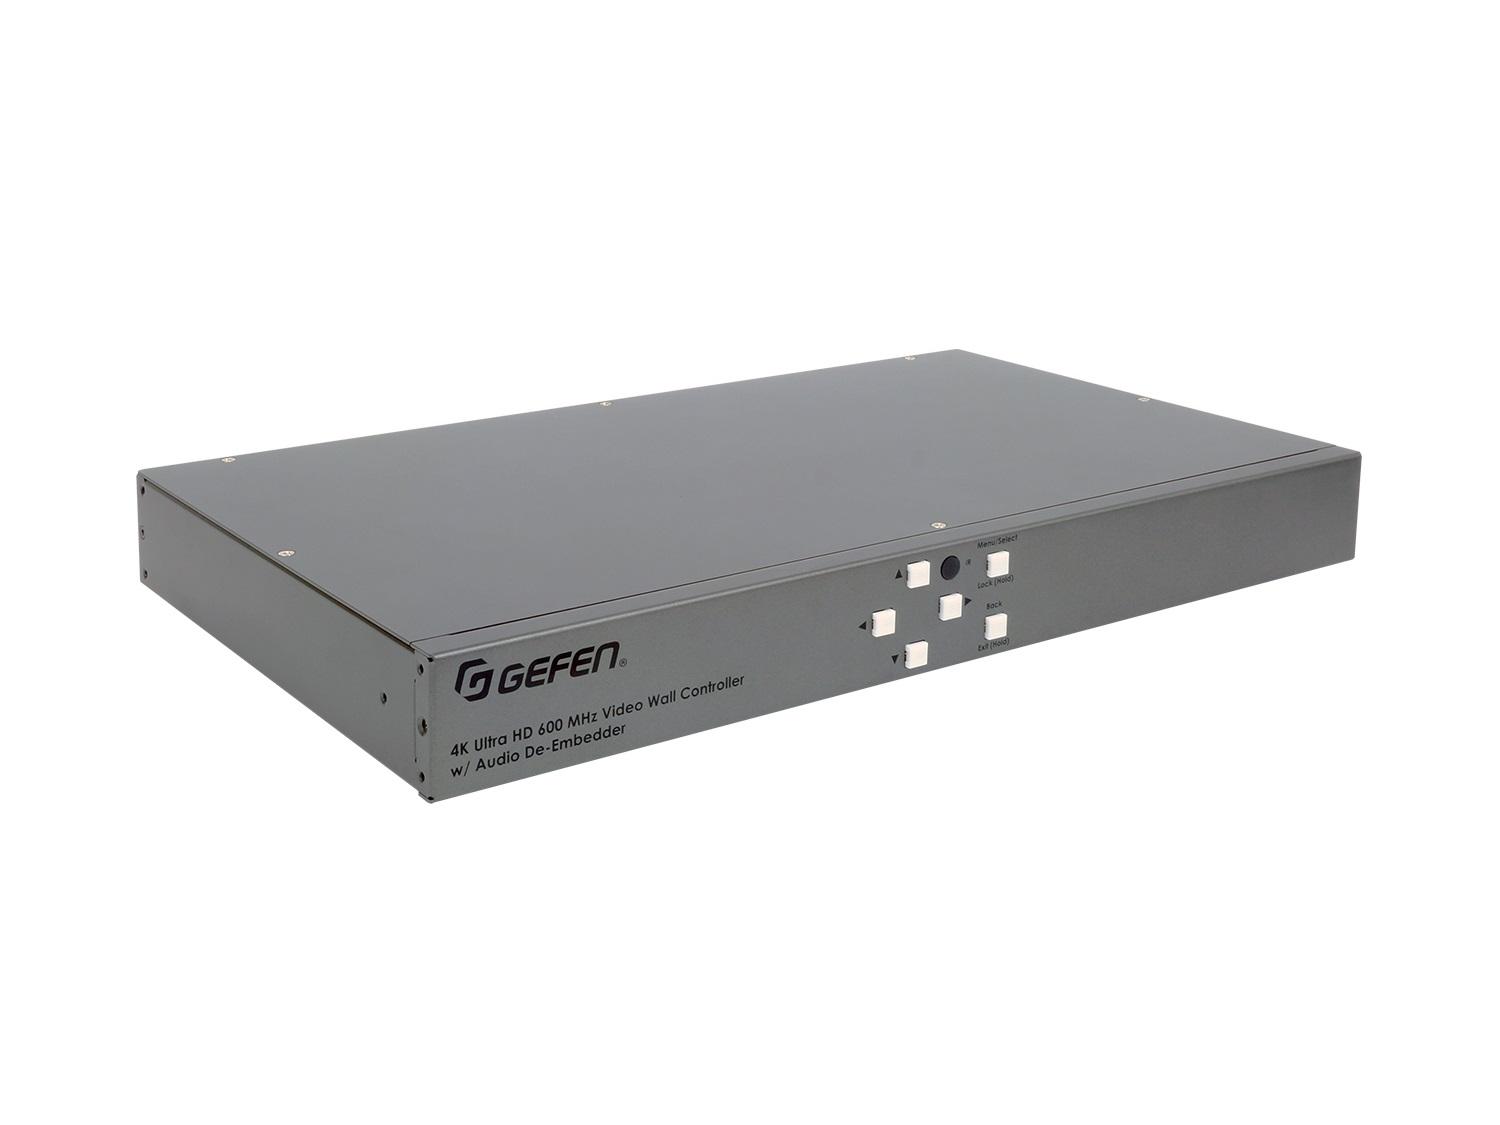 Gefen EXT-UHD600A-VWC-14 4K Ultra HD 600 MHz 1x4 Video Wall Controller with Audio De-Embedder